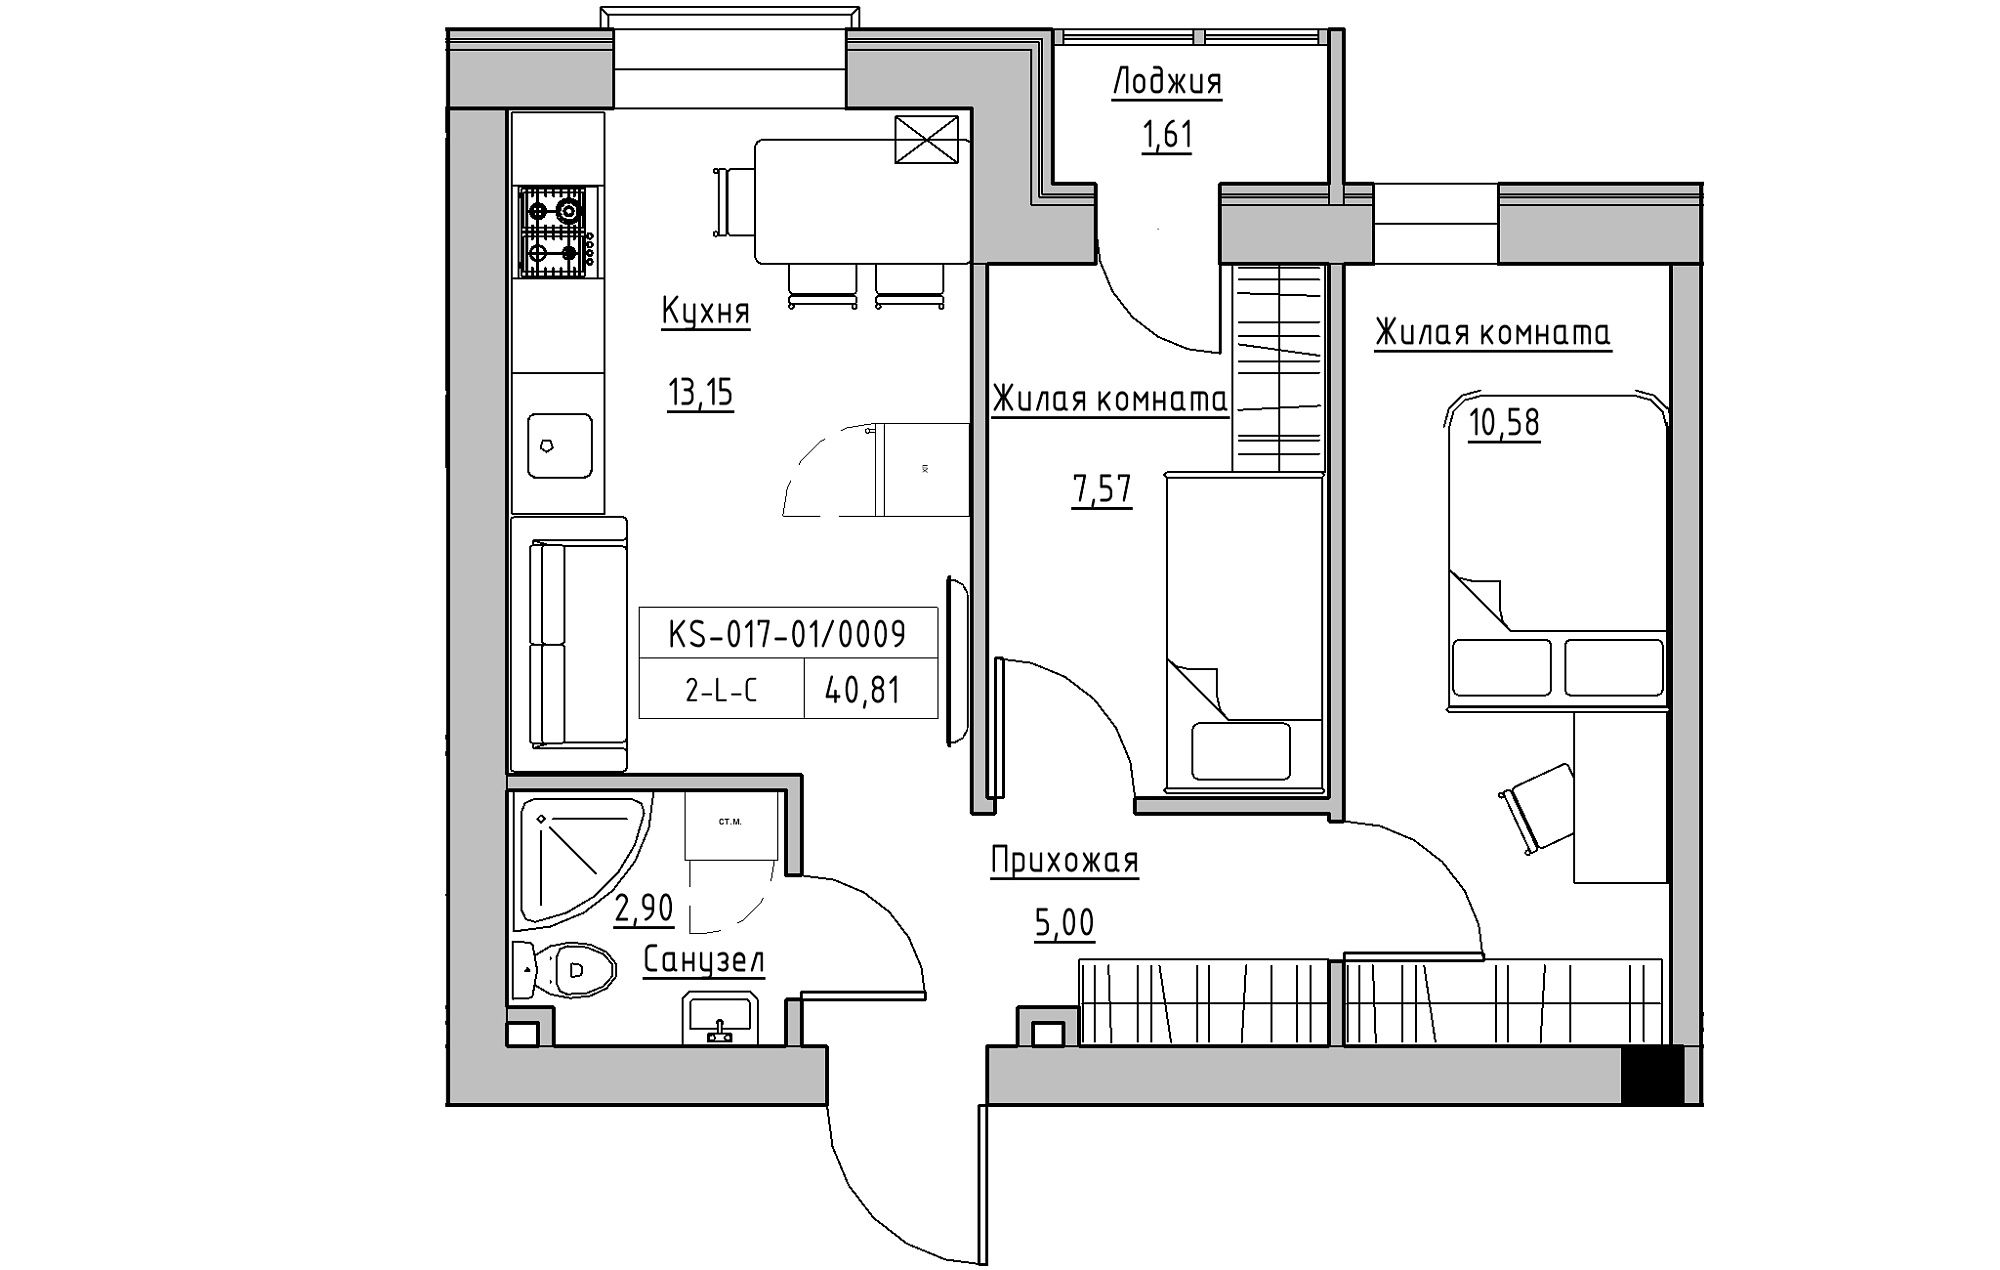 Planning 2-rm flats area 40.81m2, KS-017-01/0009.